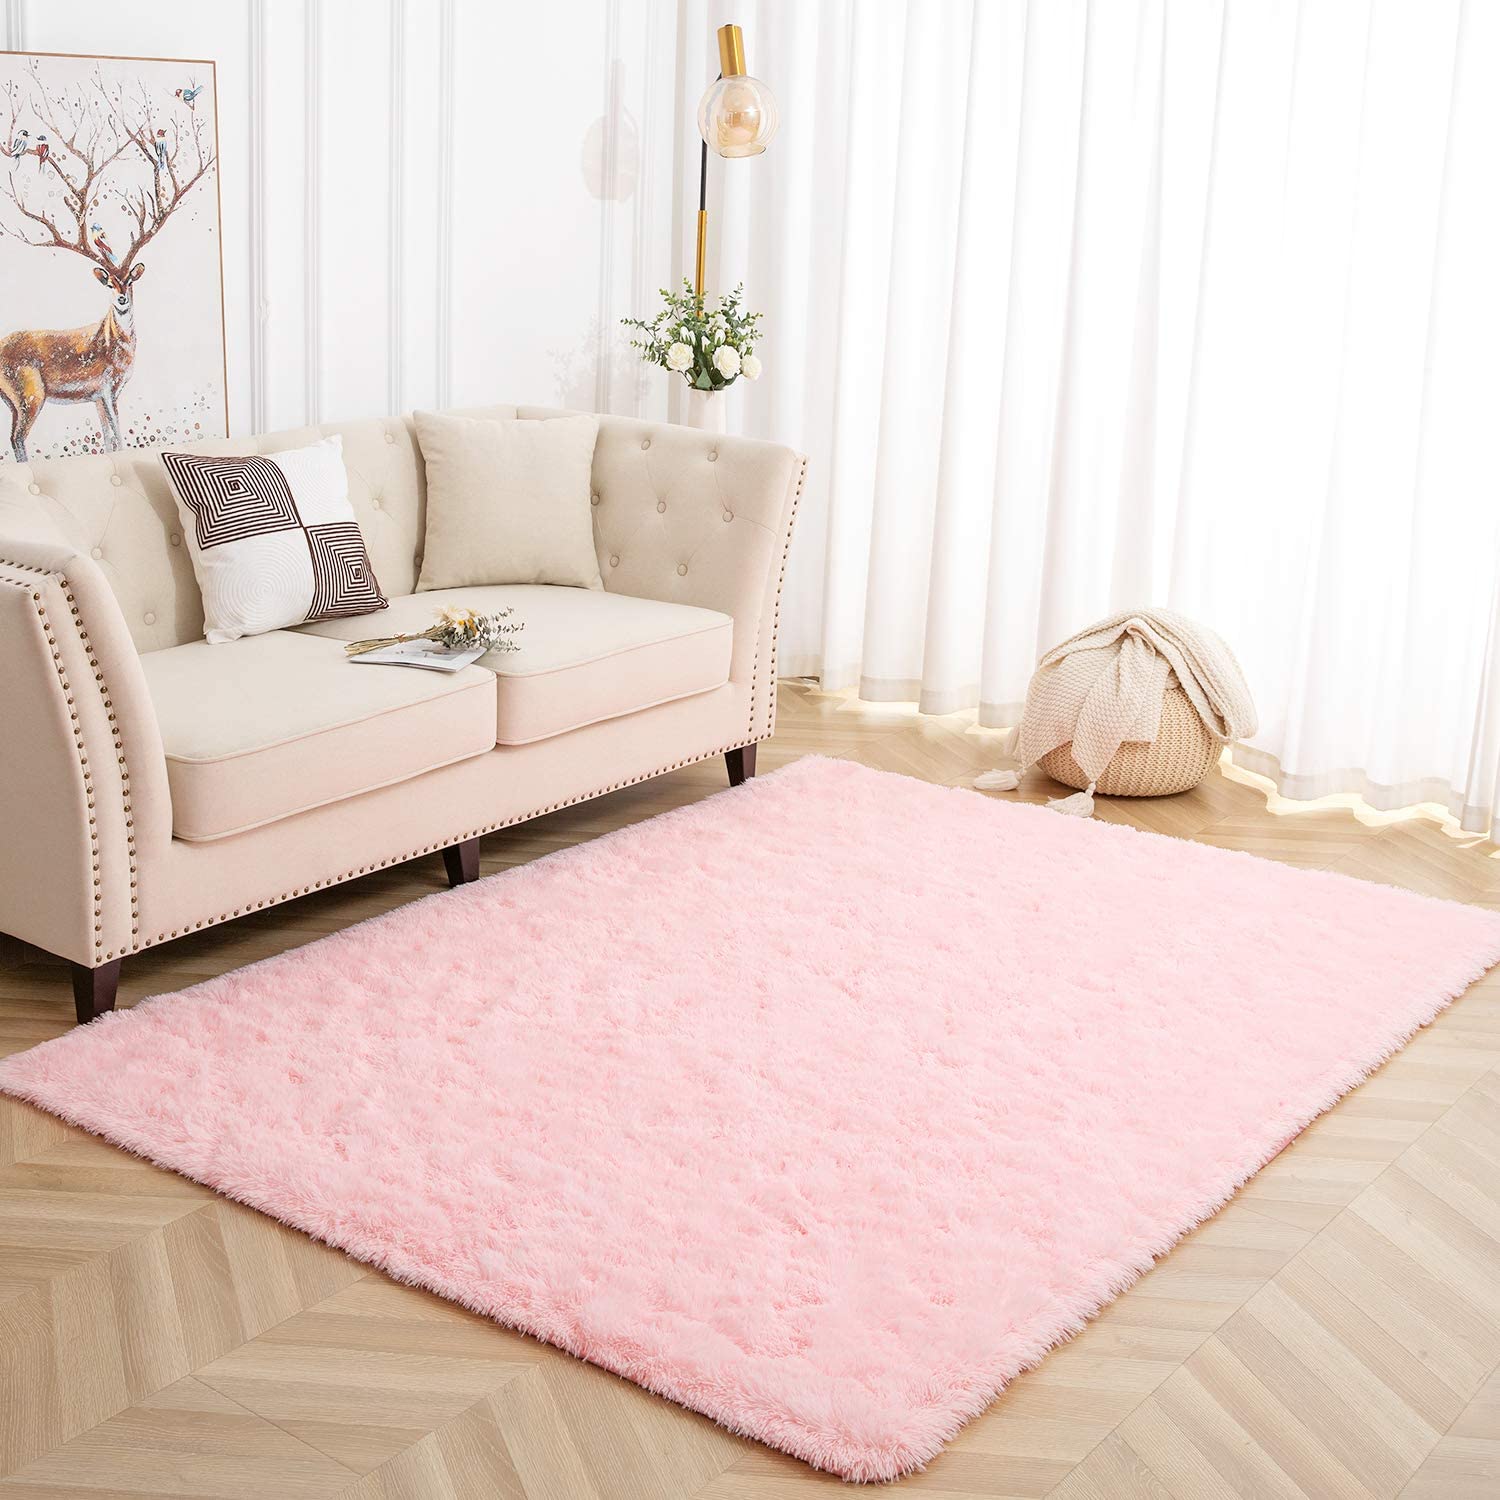 Lochas Soft Indoor Modern Area Rugs Fluffy Living Room Carpets for Children Bedroom Home Decor Nursery Rug 4' x 5.3', Pink - image 2 of 7